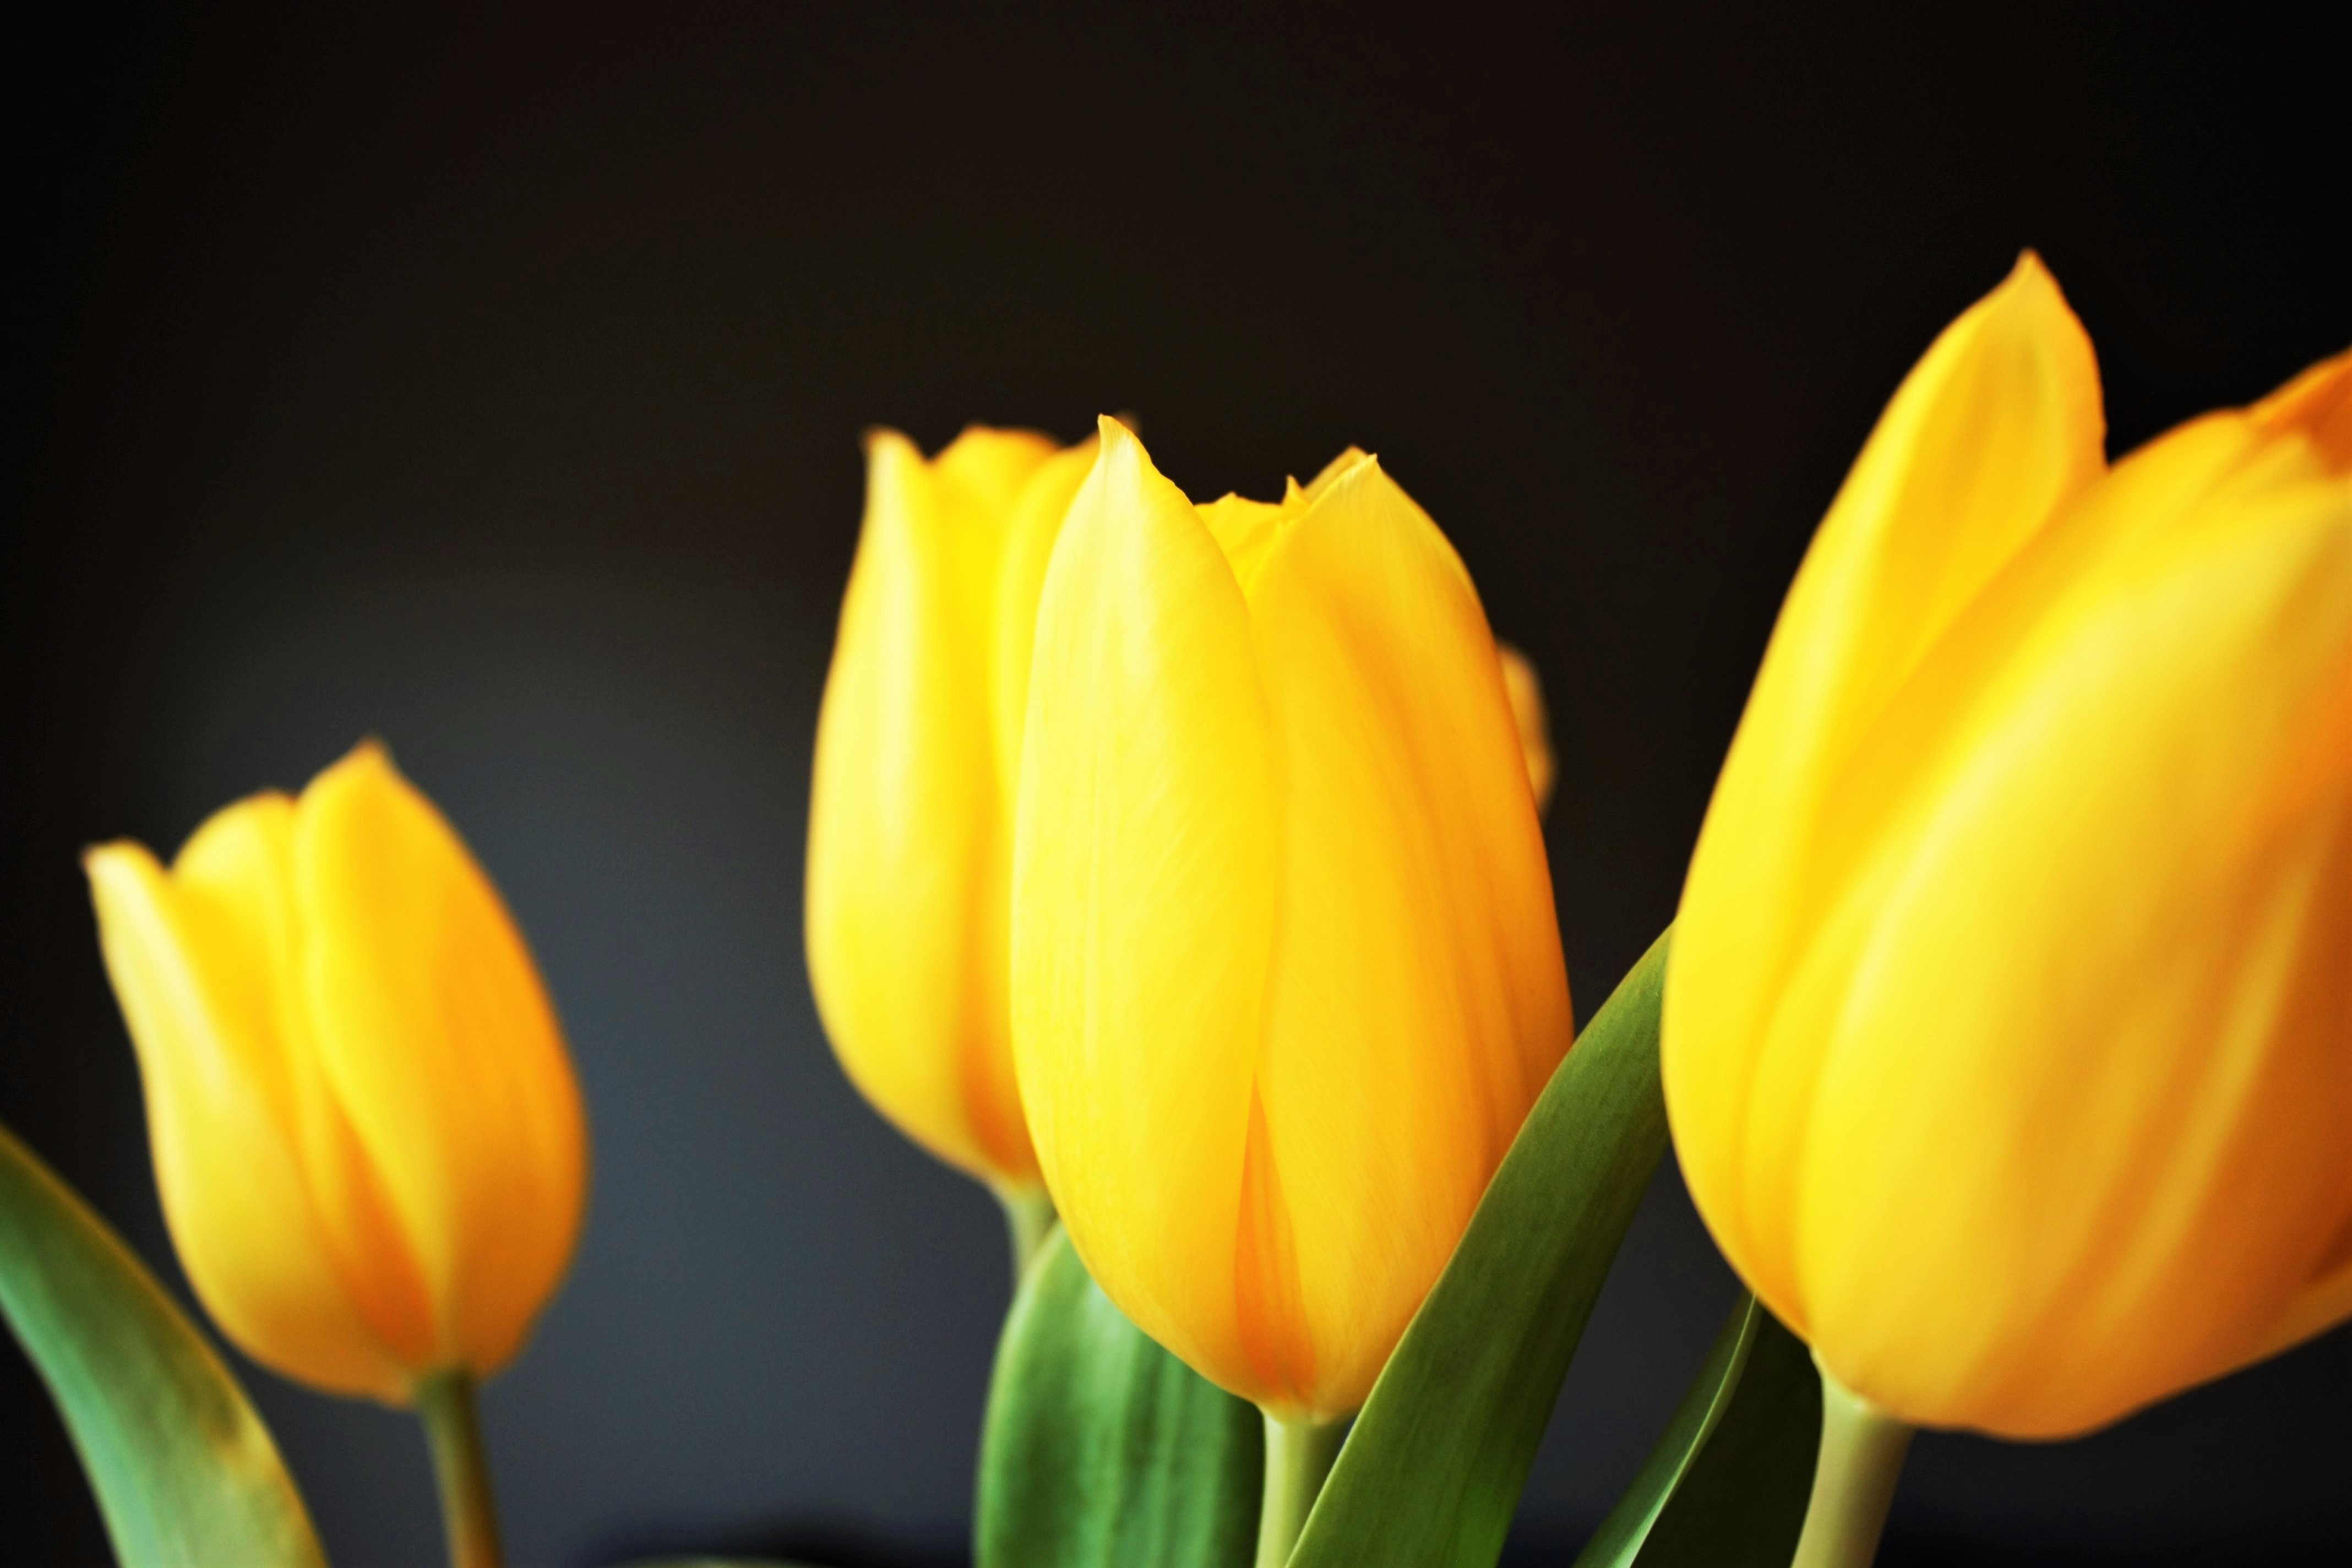 4 yellow tulips